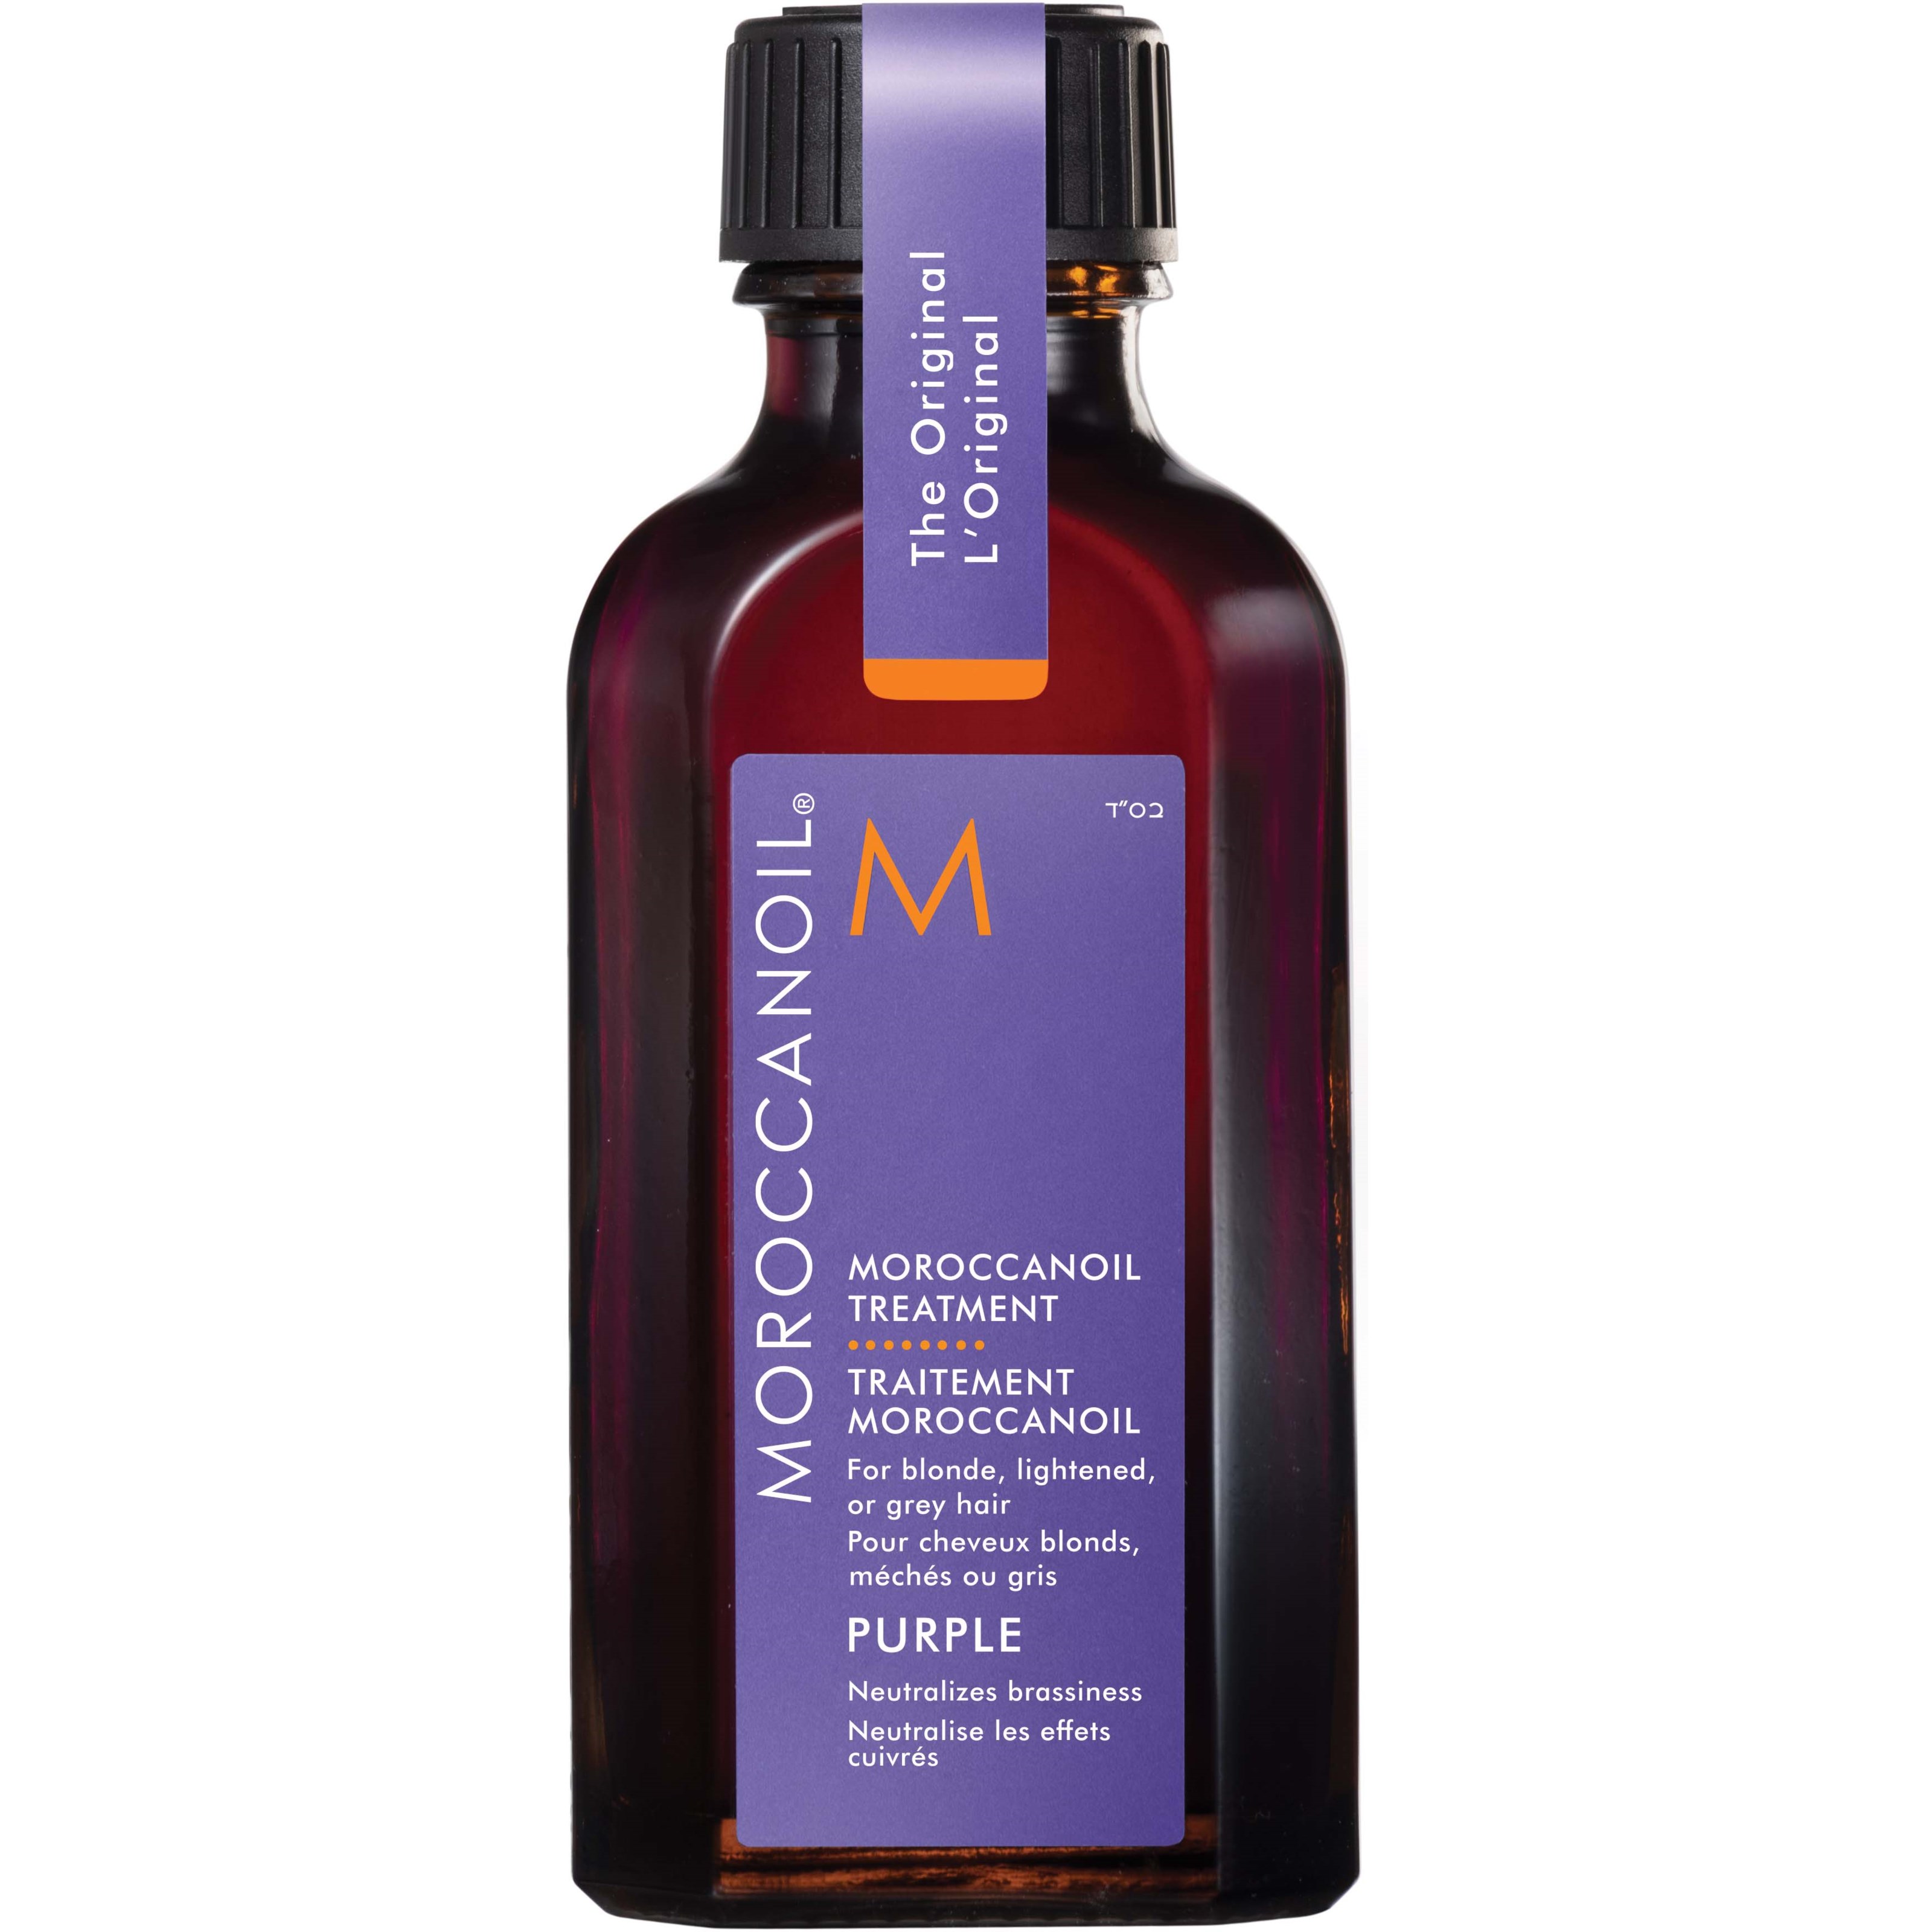 Moroccanoil Treatment Purple 50 ml